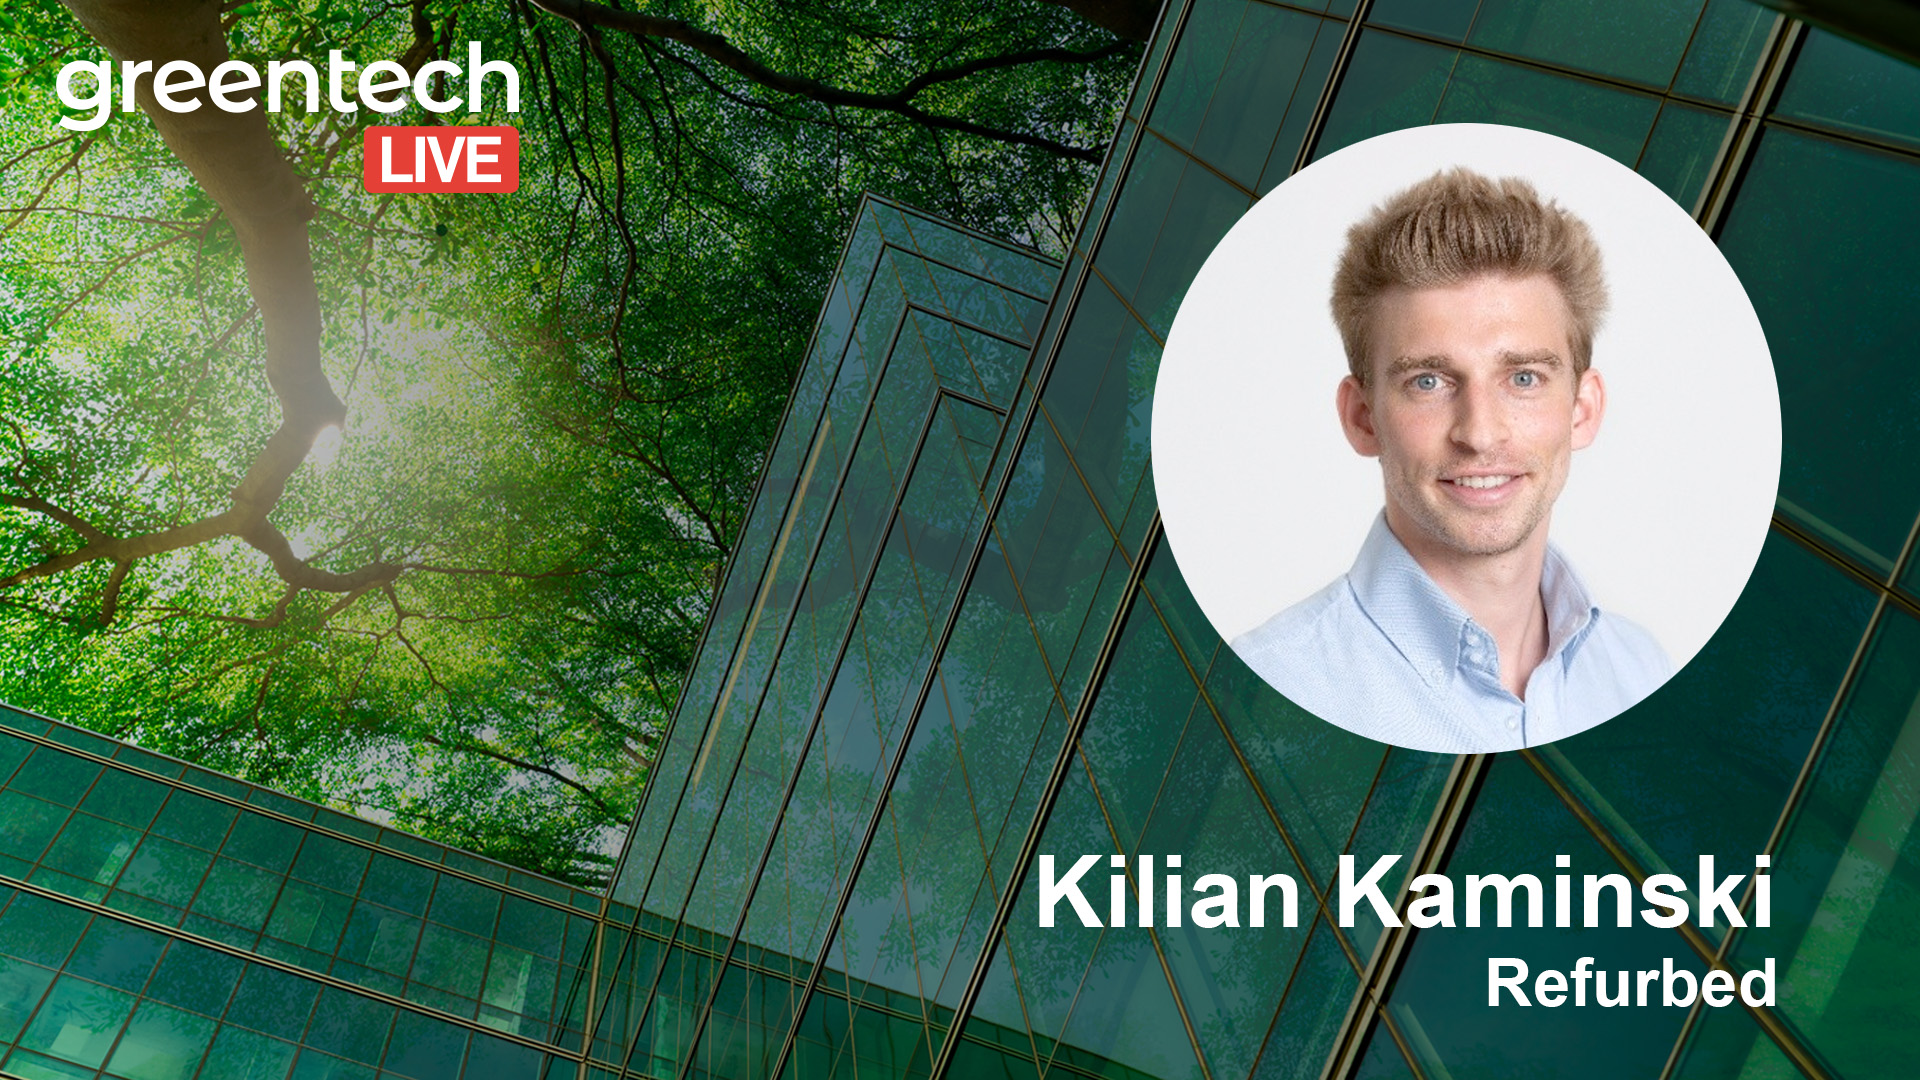 Kilian kaminski Refurbed Greentech Live